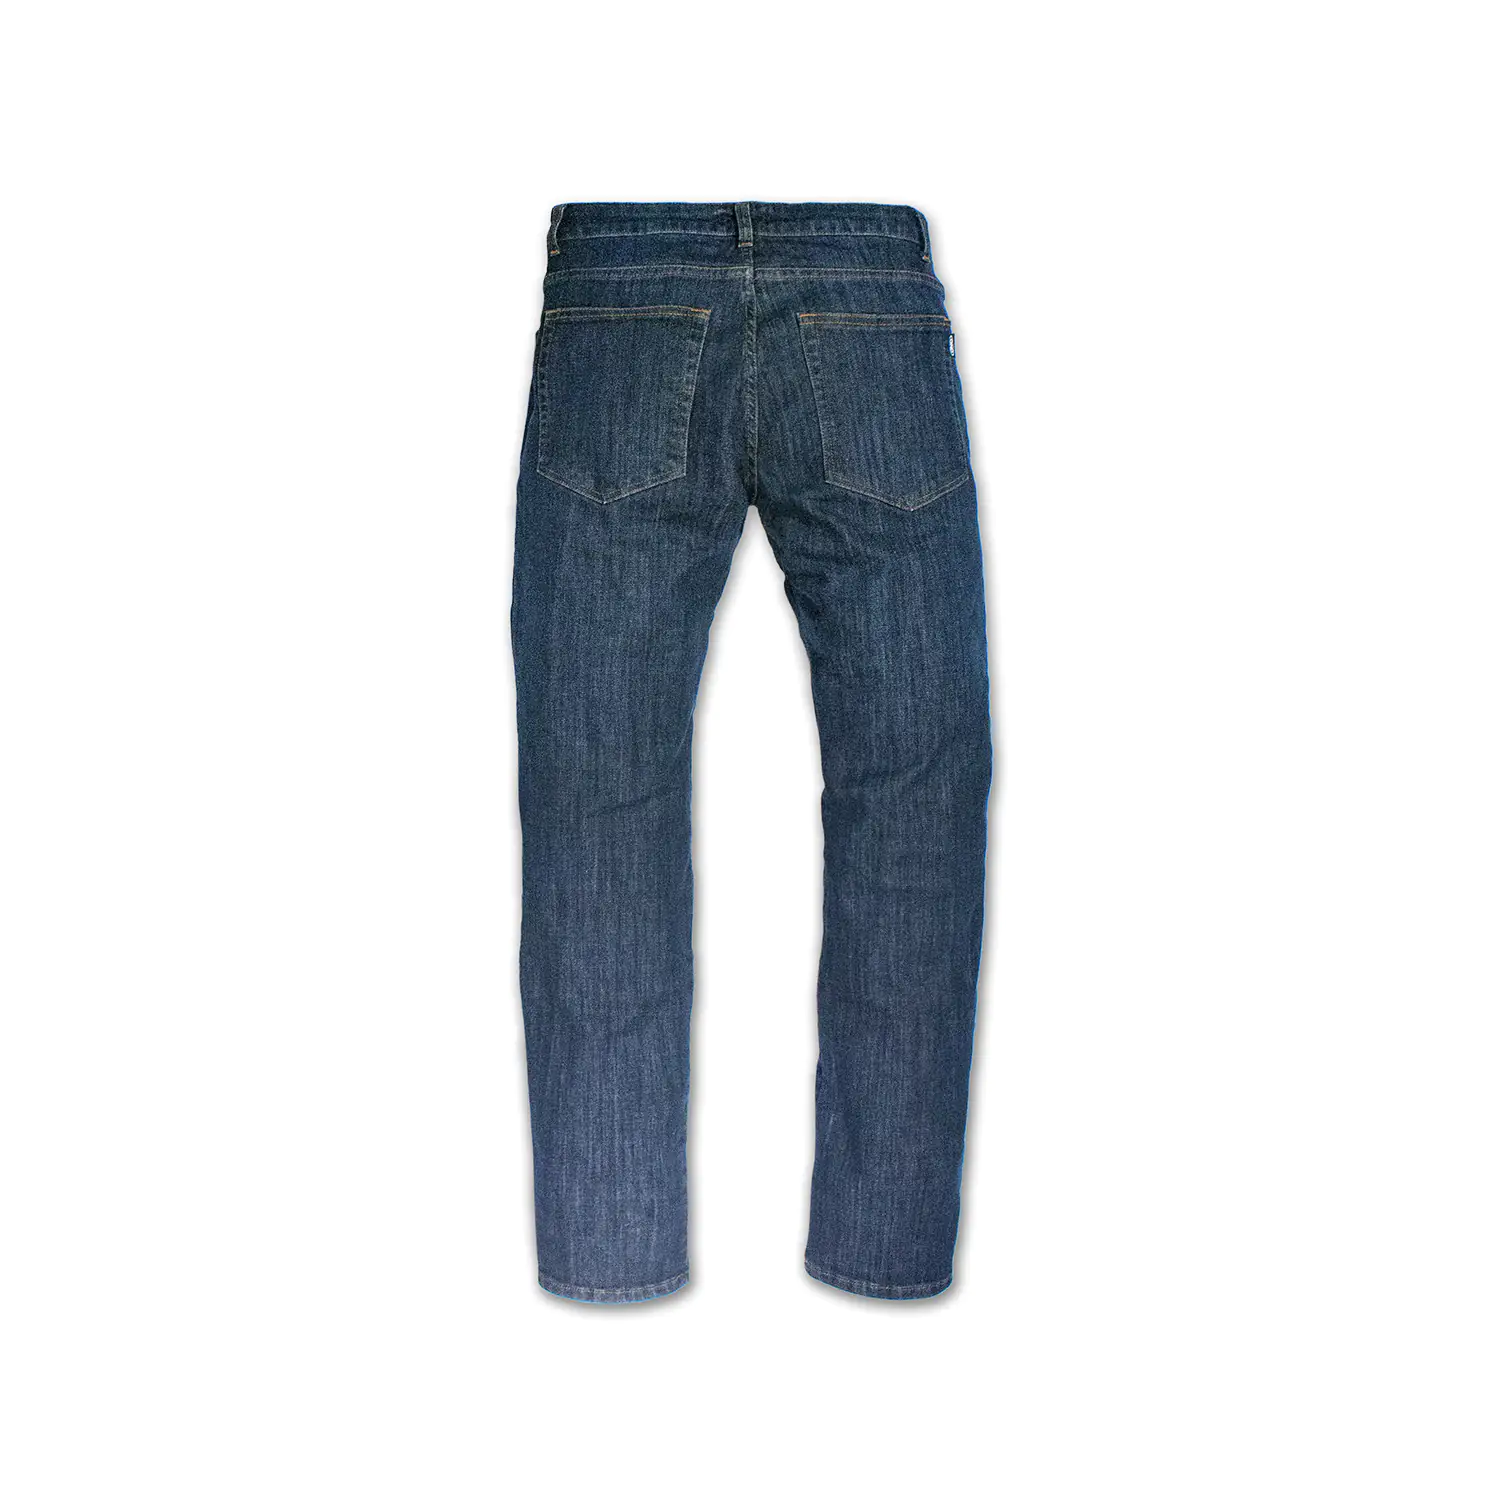 dmd.eu - JEANS DMD – Pants Jeans – back